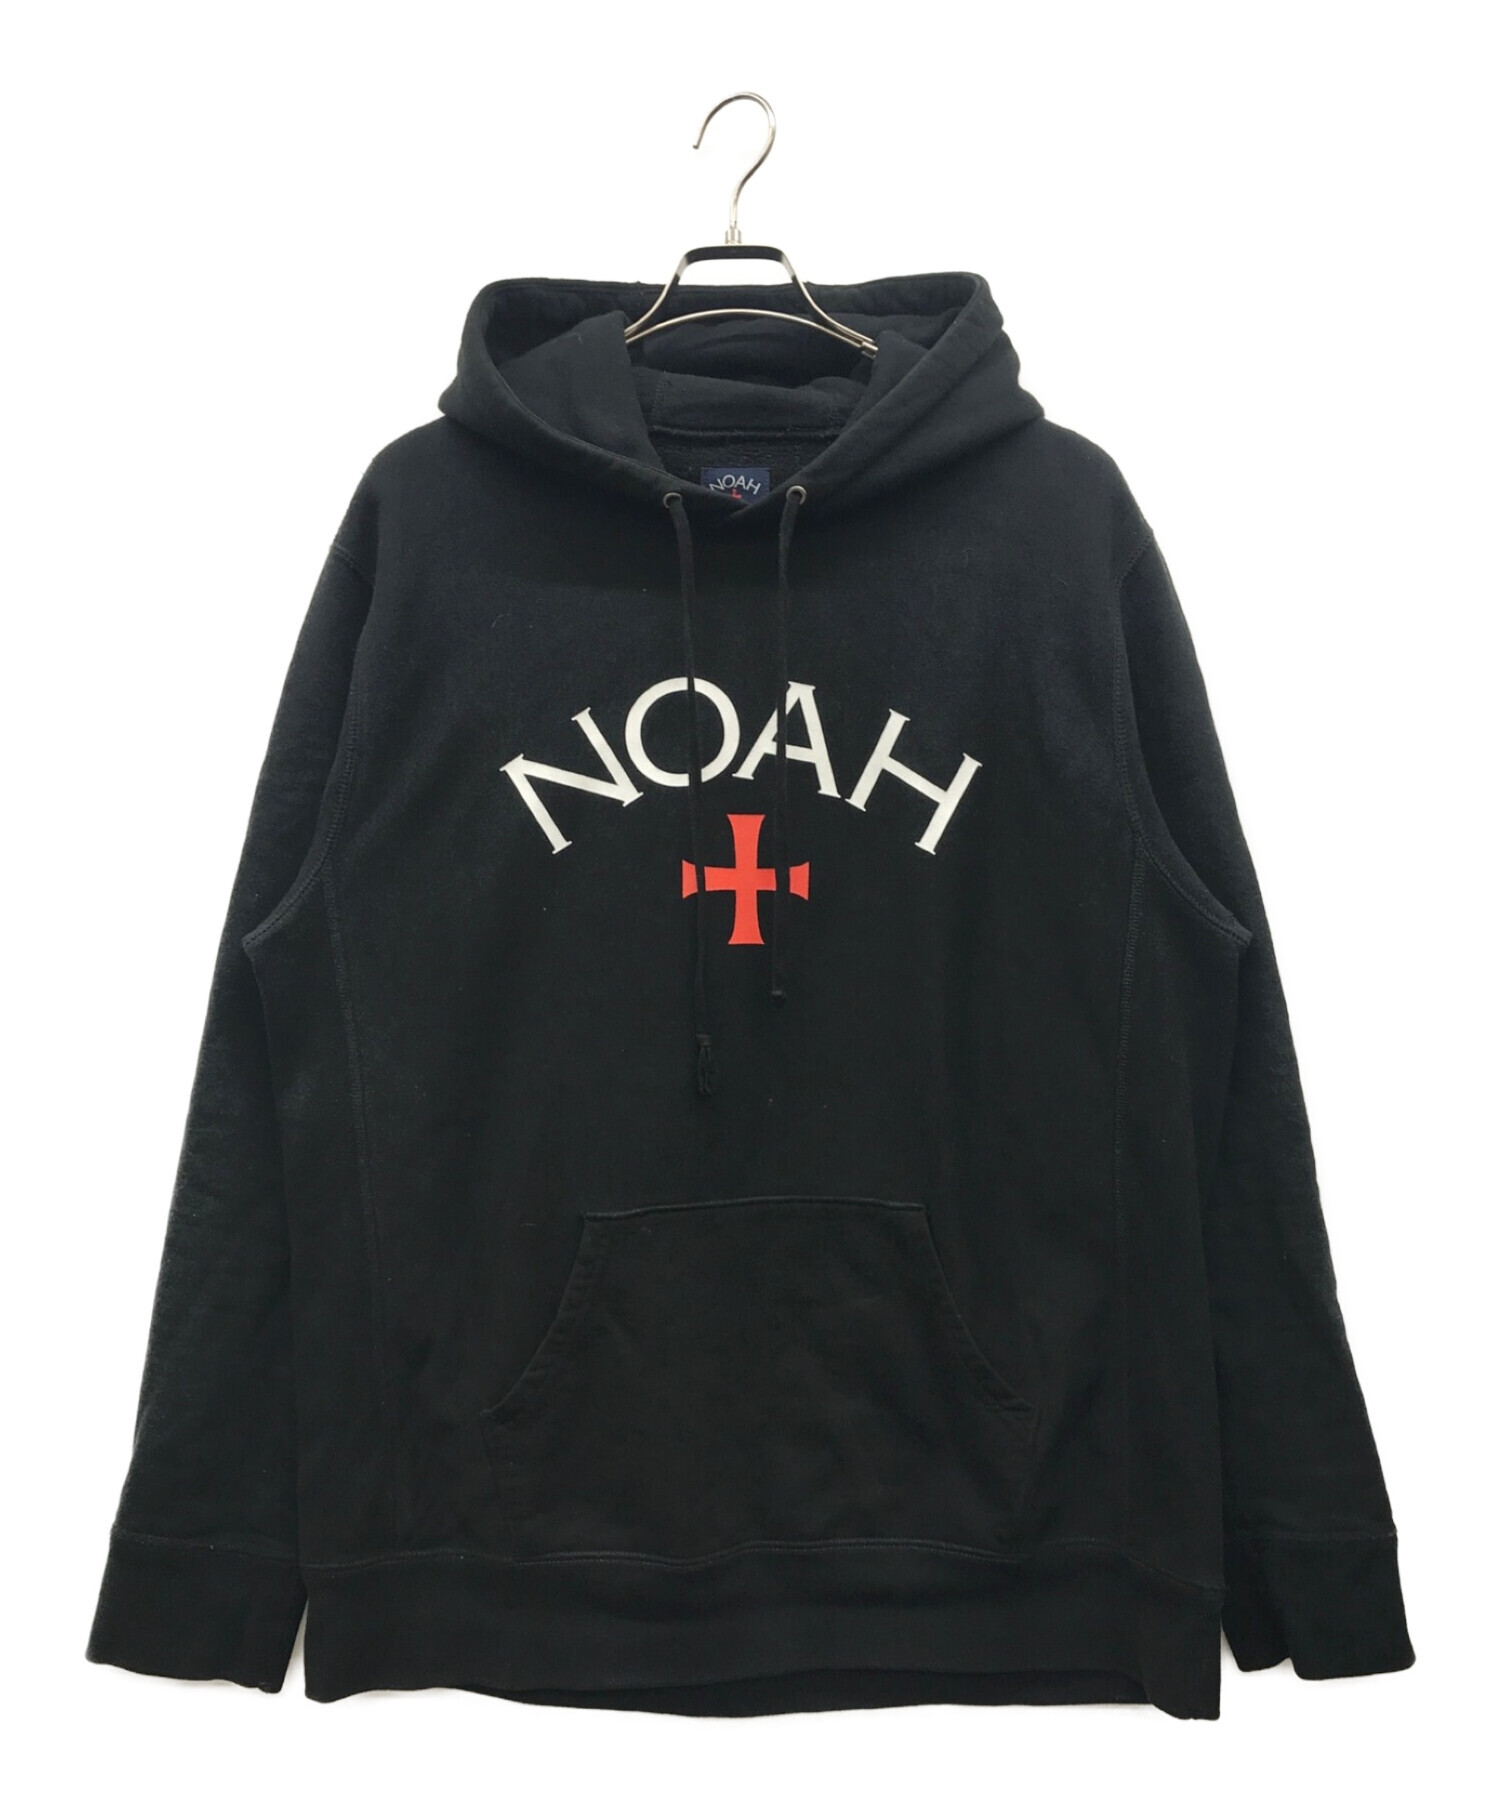 Noah (ノア) ロゴパーカー ブラック サイズ:XL